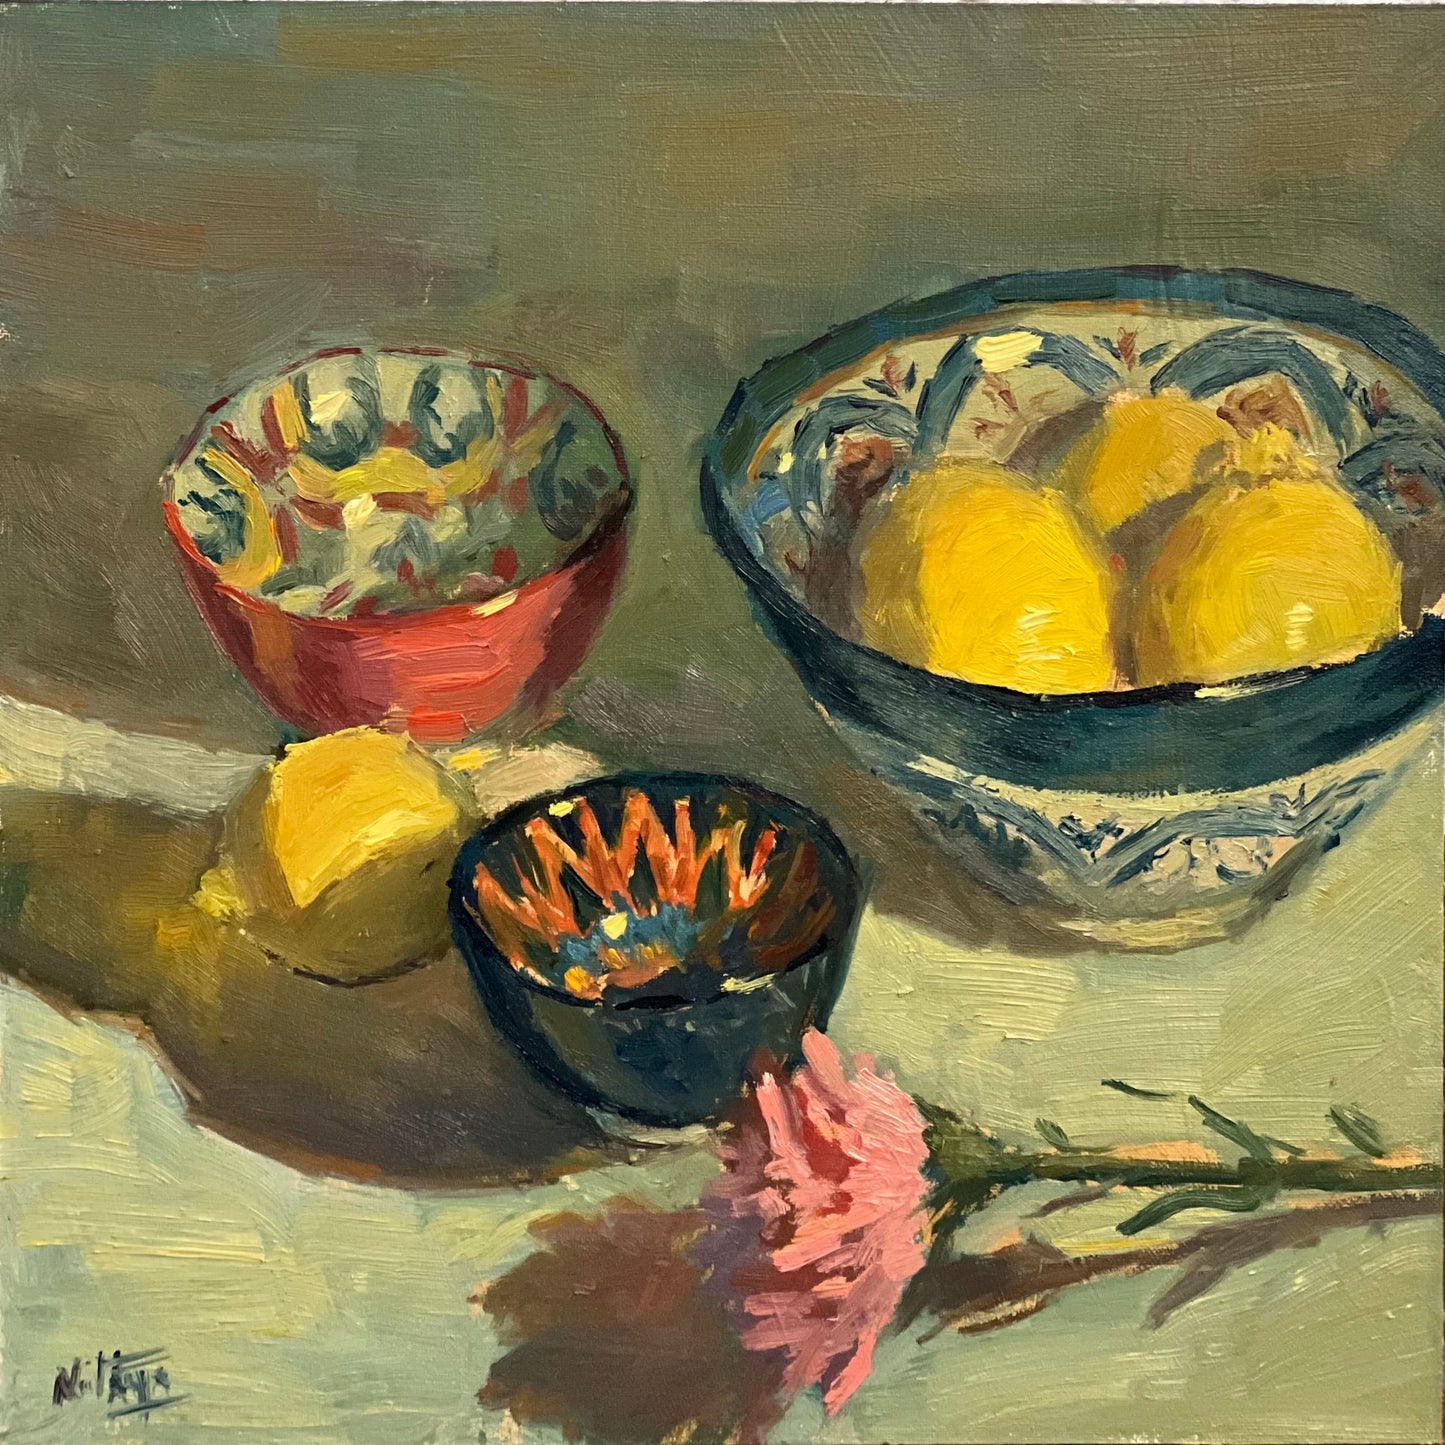 Three bowls and lemons - still life oil painting